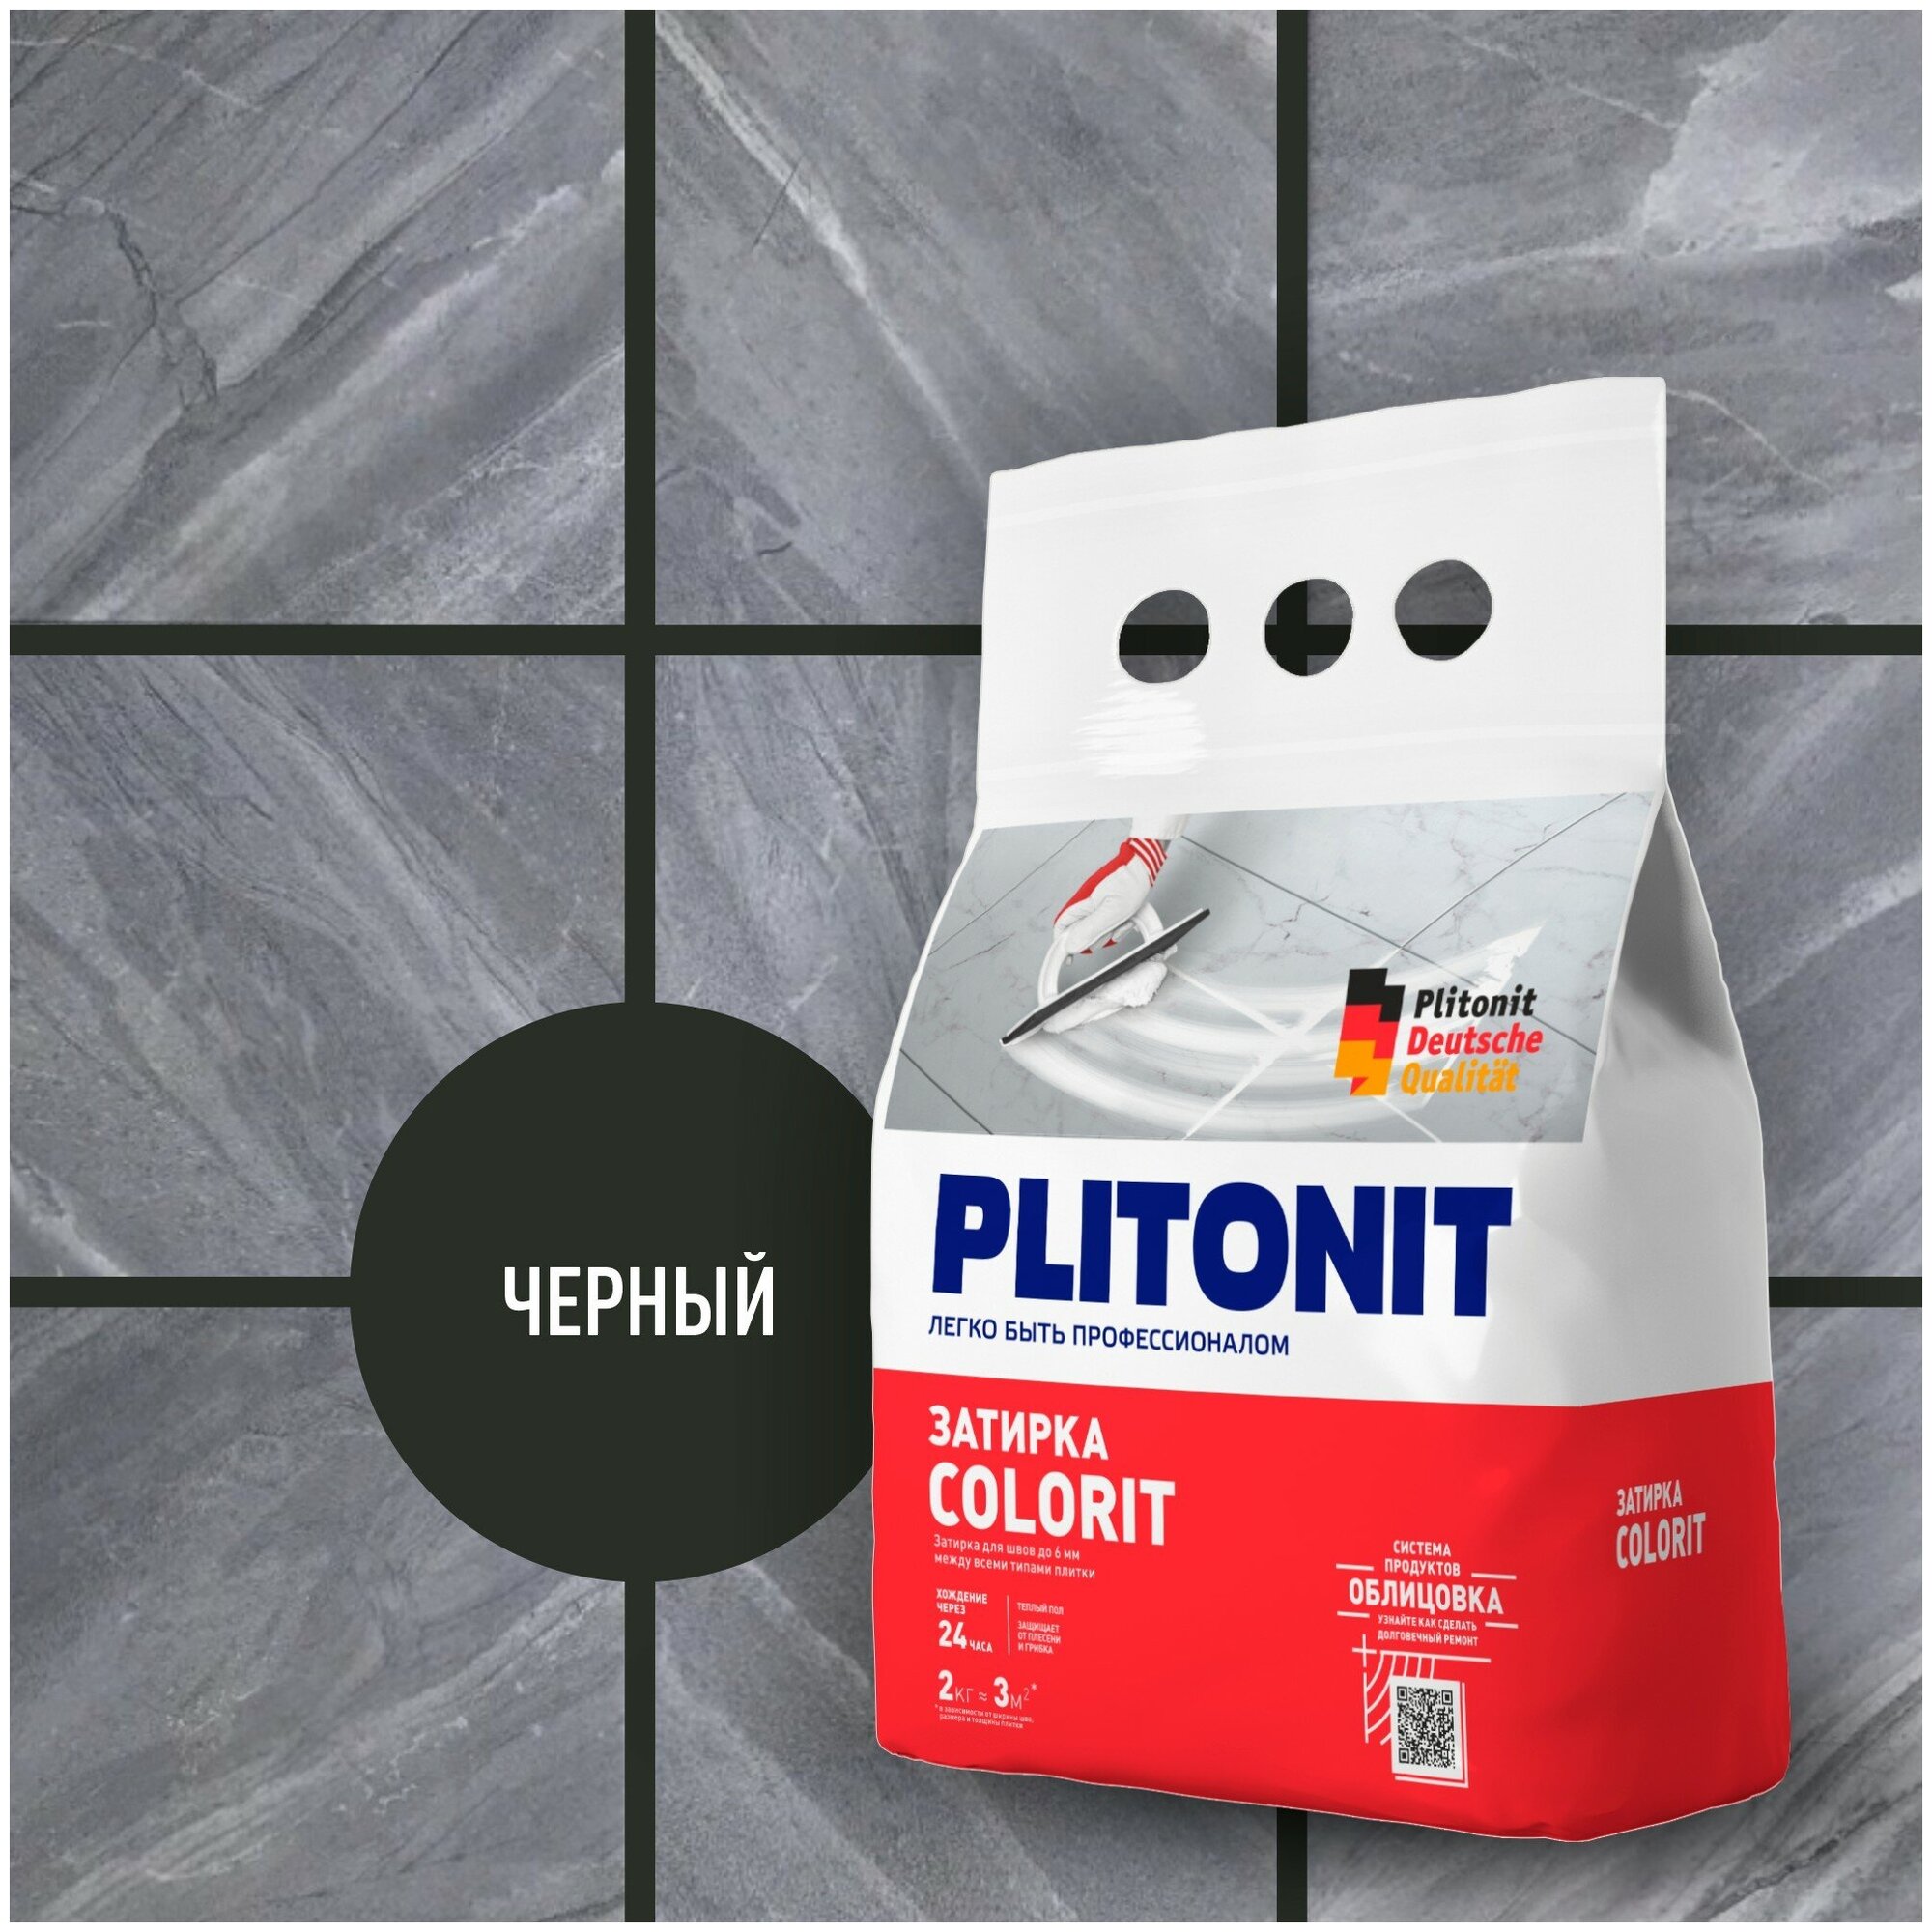 Plitonit Colorit Затирка для плитки 2 килограмма черная - фотография № 2